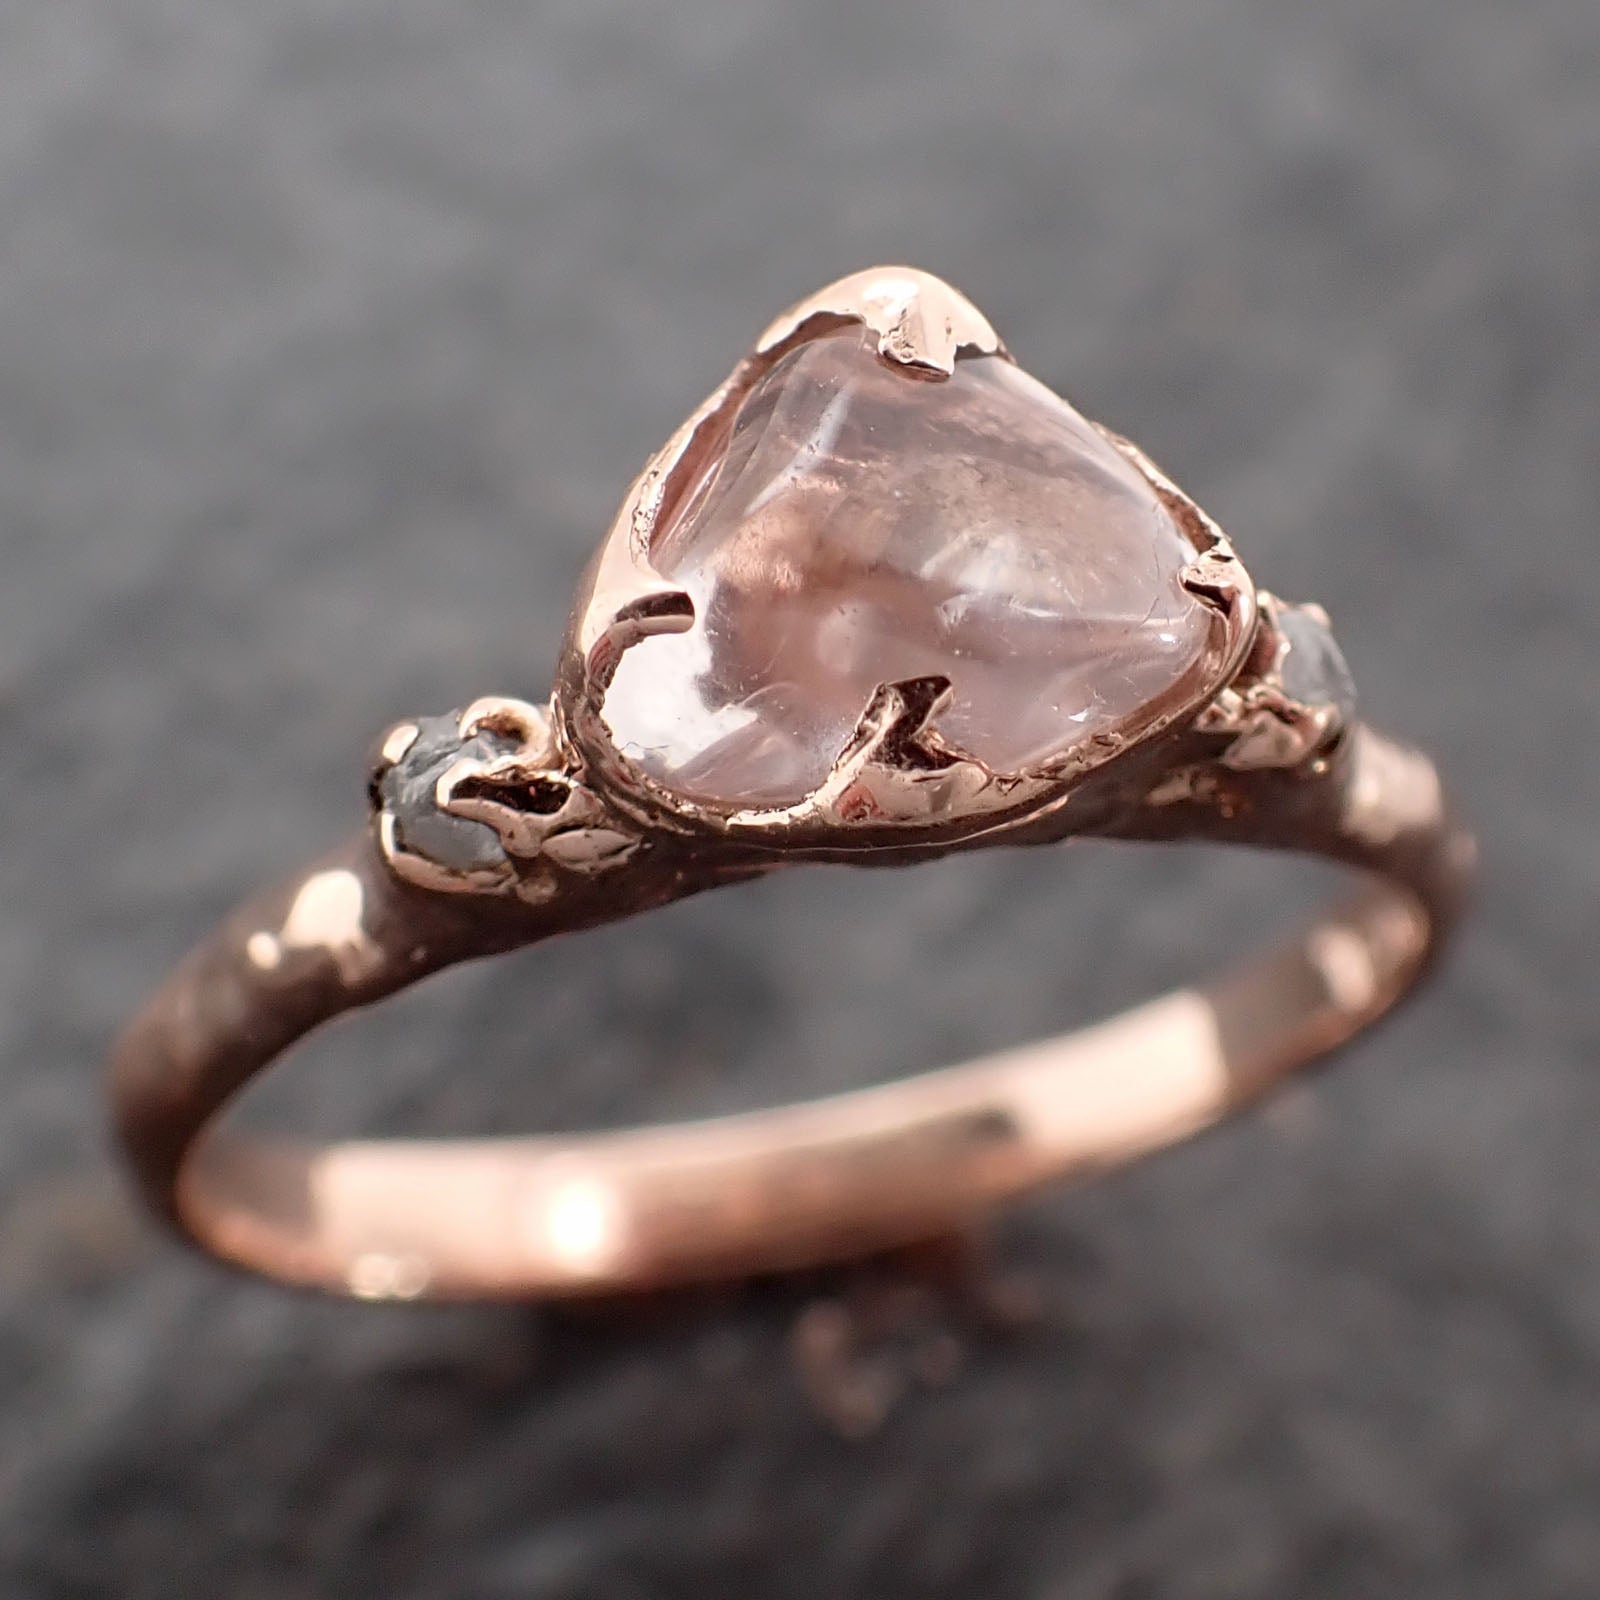 morganite pebble candy polished and rough diamond 14k rose gold gemstone multi stone ring 2737 Alternative Engagement